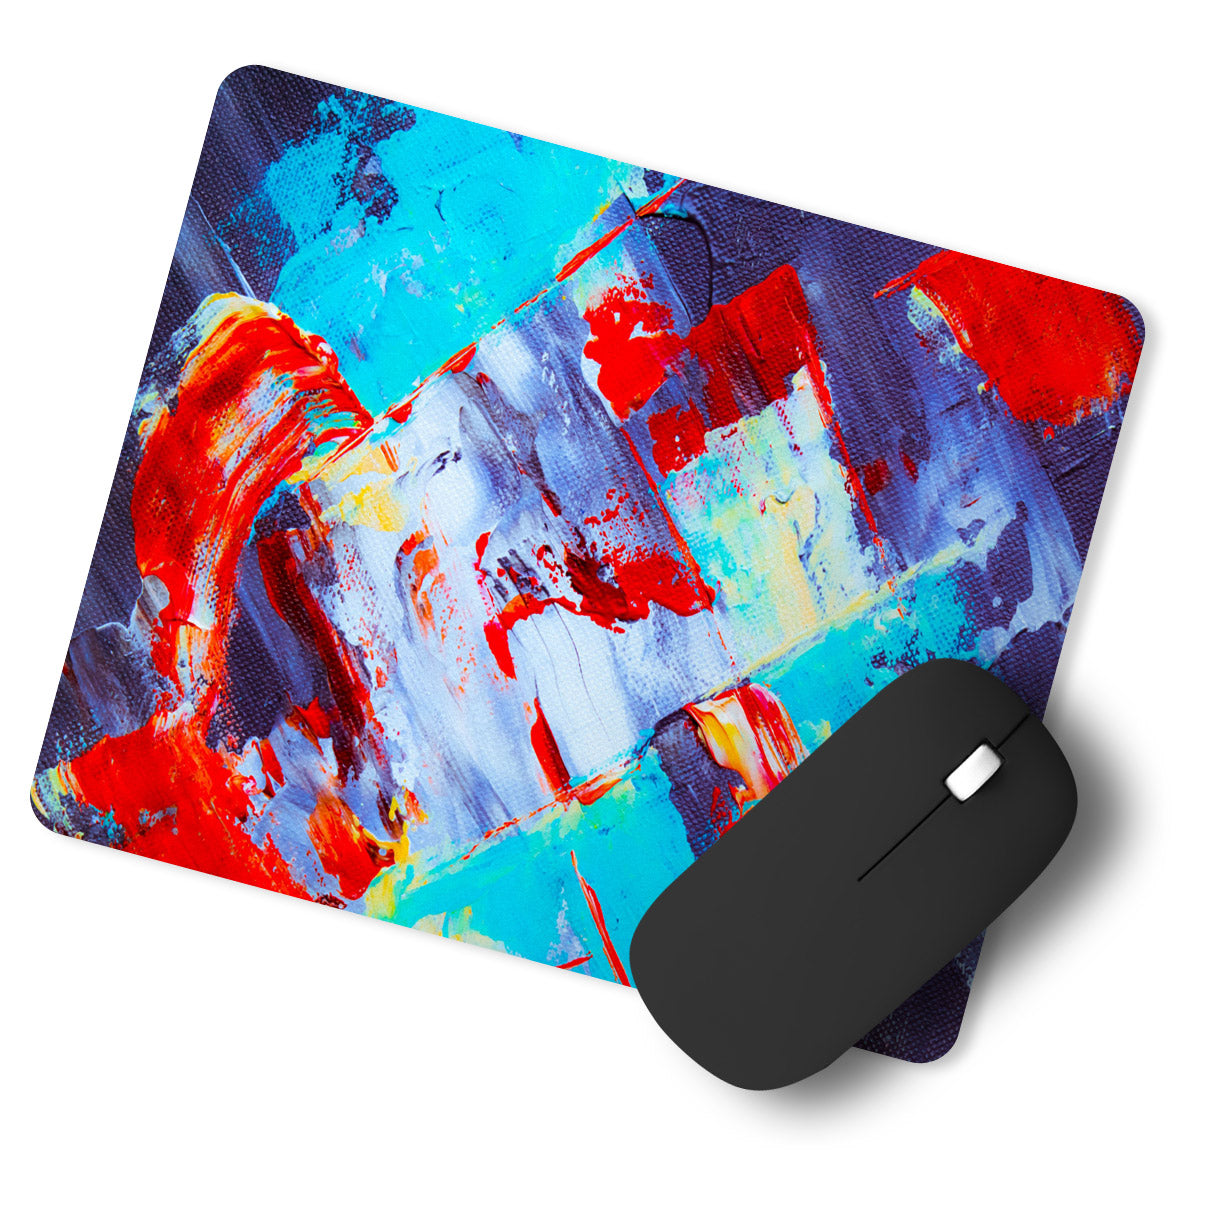 Painted Colors Designer Printed Premium Mouse pad (9 in x 7.5 in)